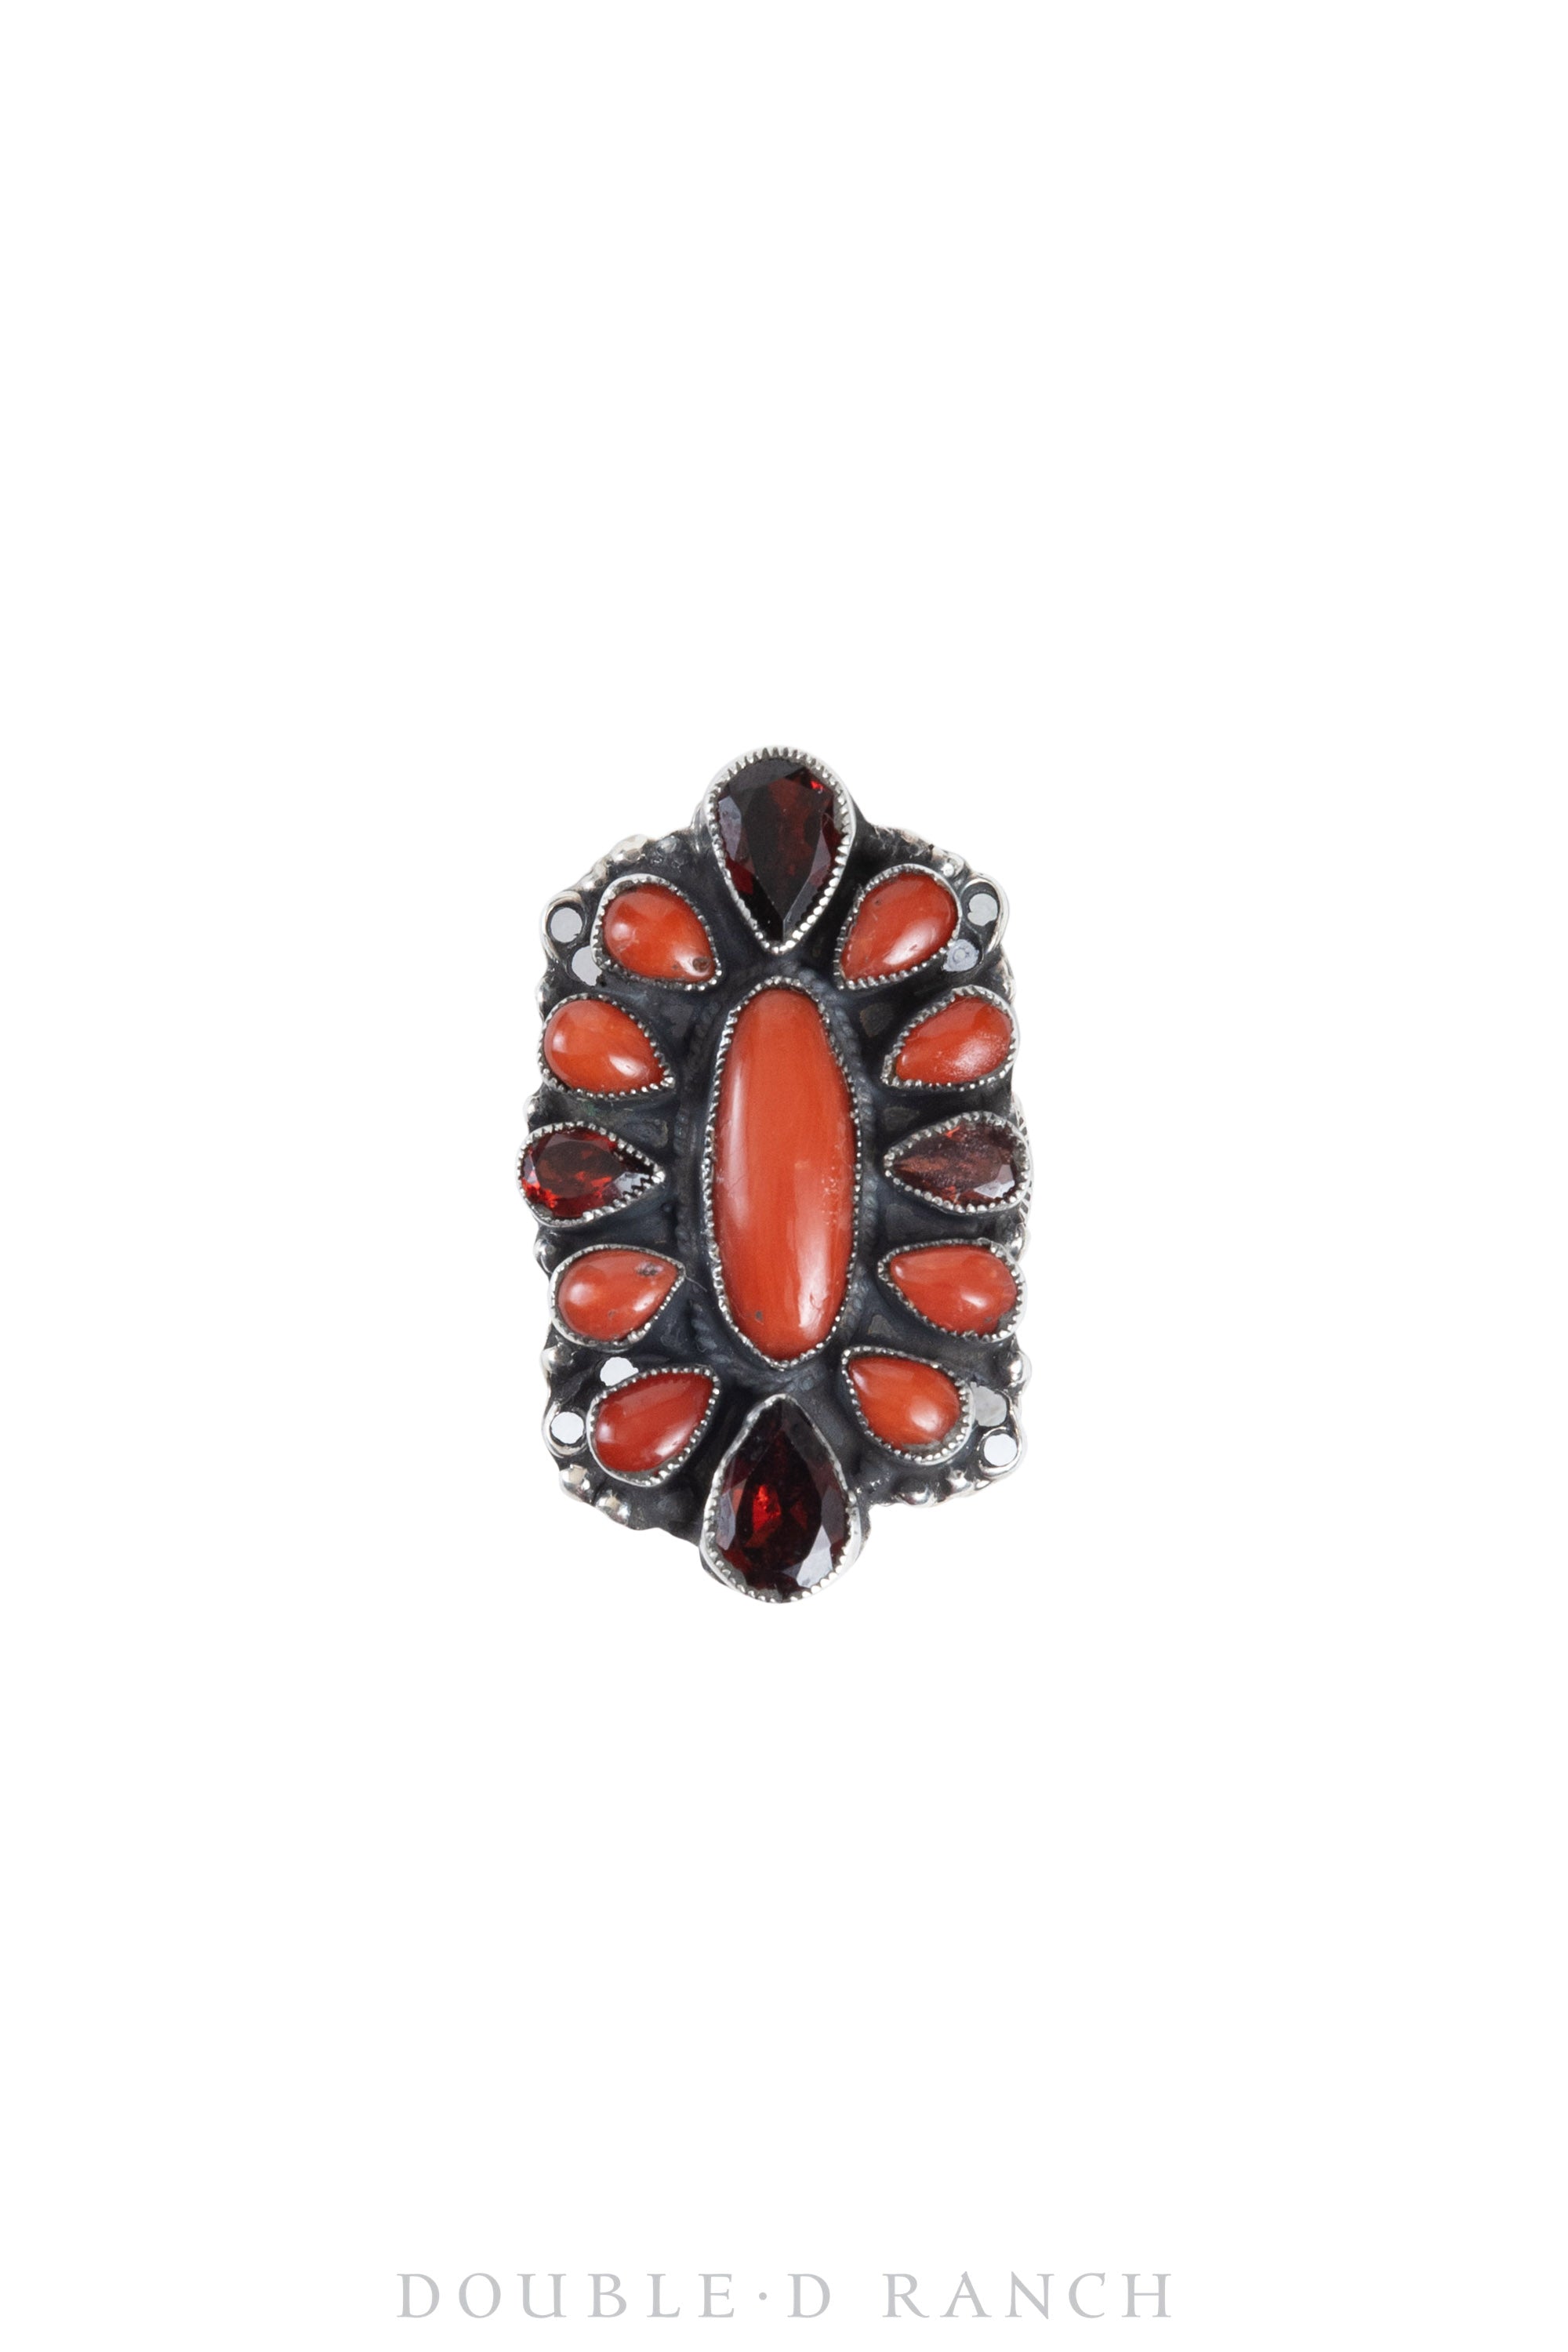 Ring, Cluster, Coral & Ruby Gemstones, Leo Feeney Hallmark, Contemporary, 1348